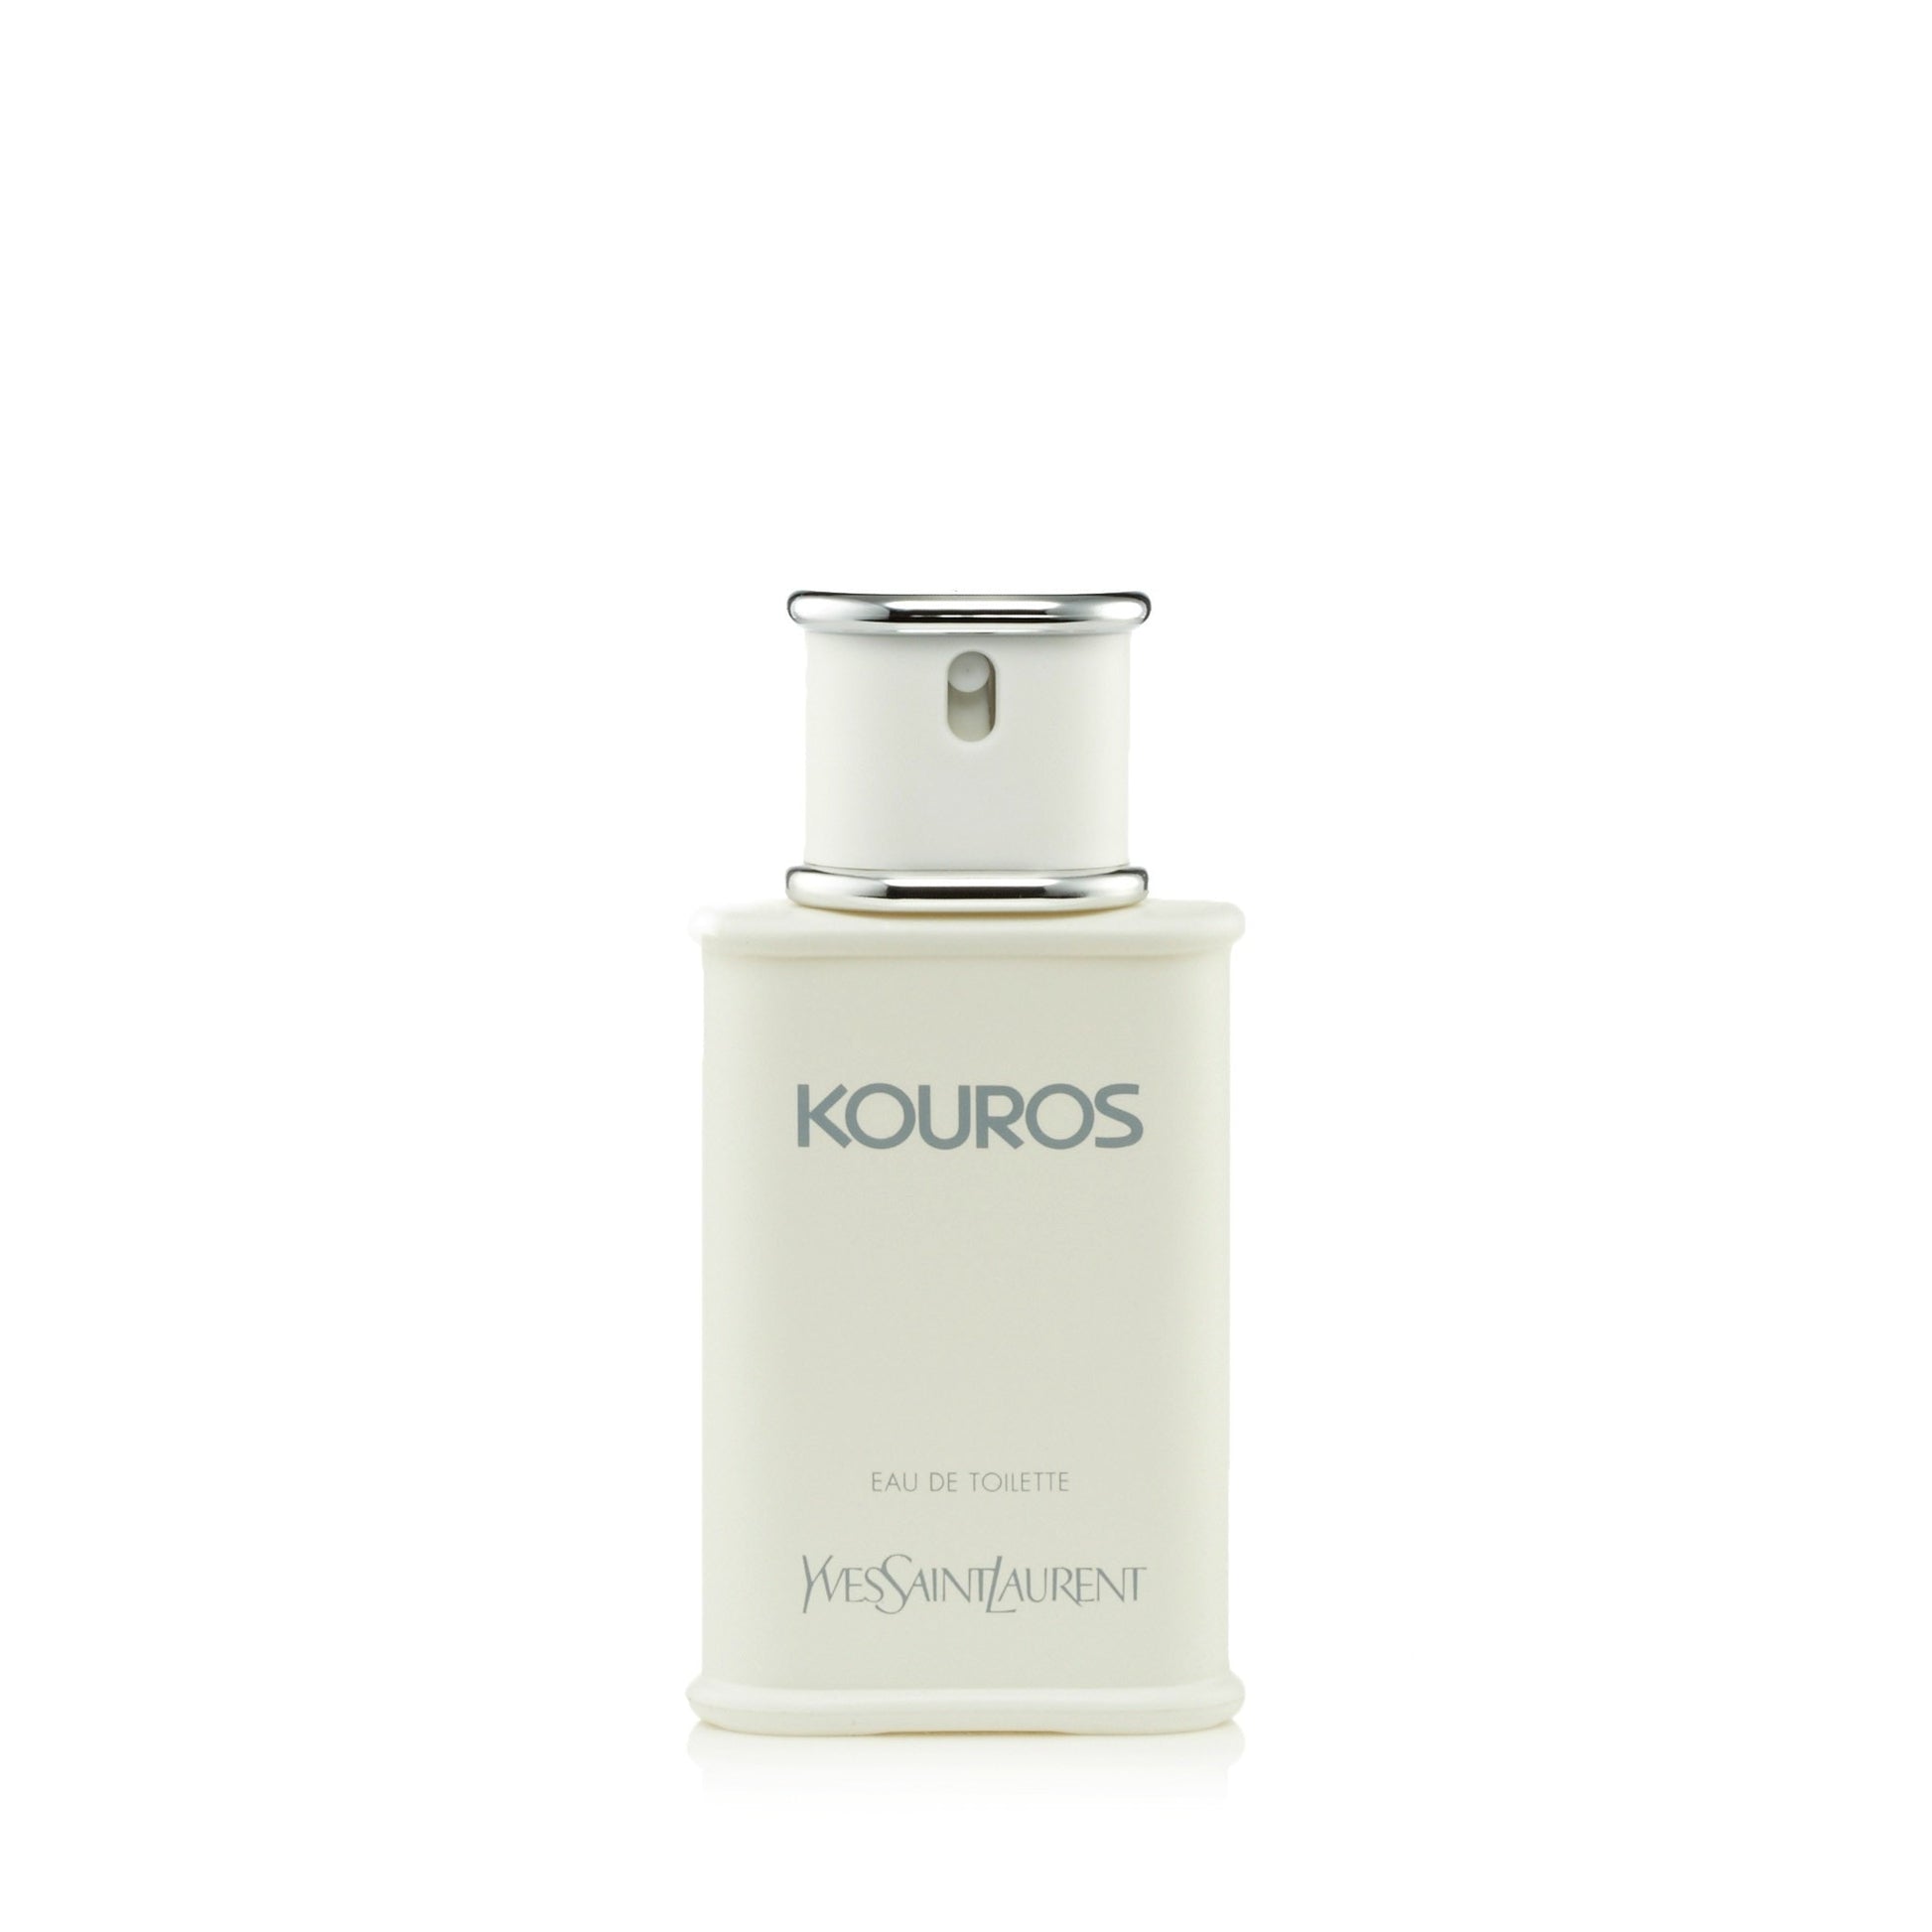 Yves Saint Laurent Kouros Eau de Toilette Mens Spray 1.6 oz. Click to open in modal